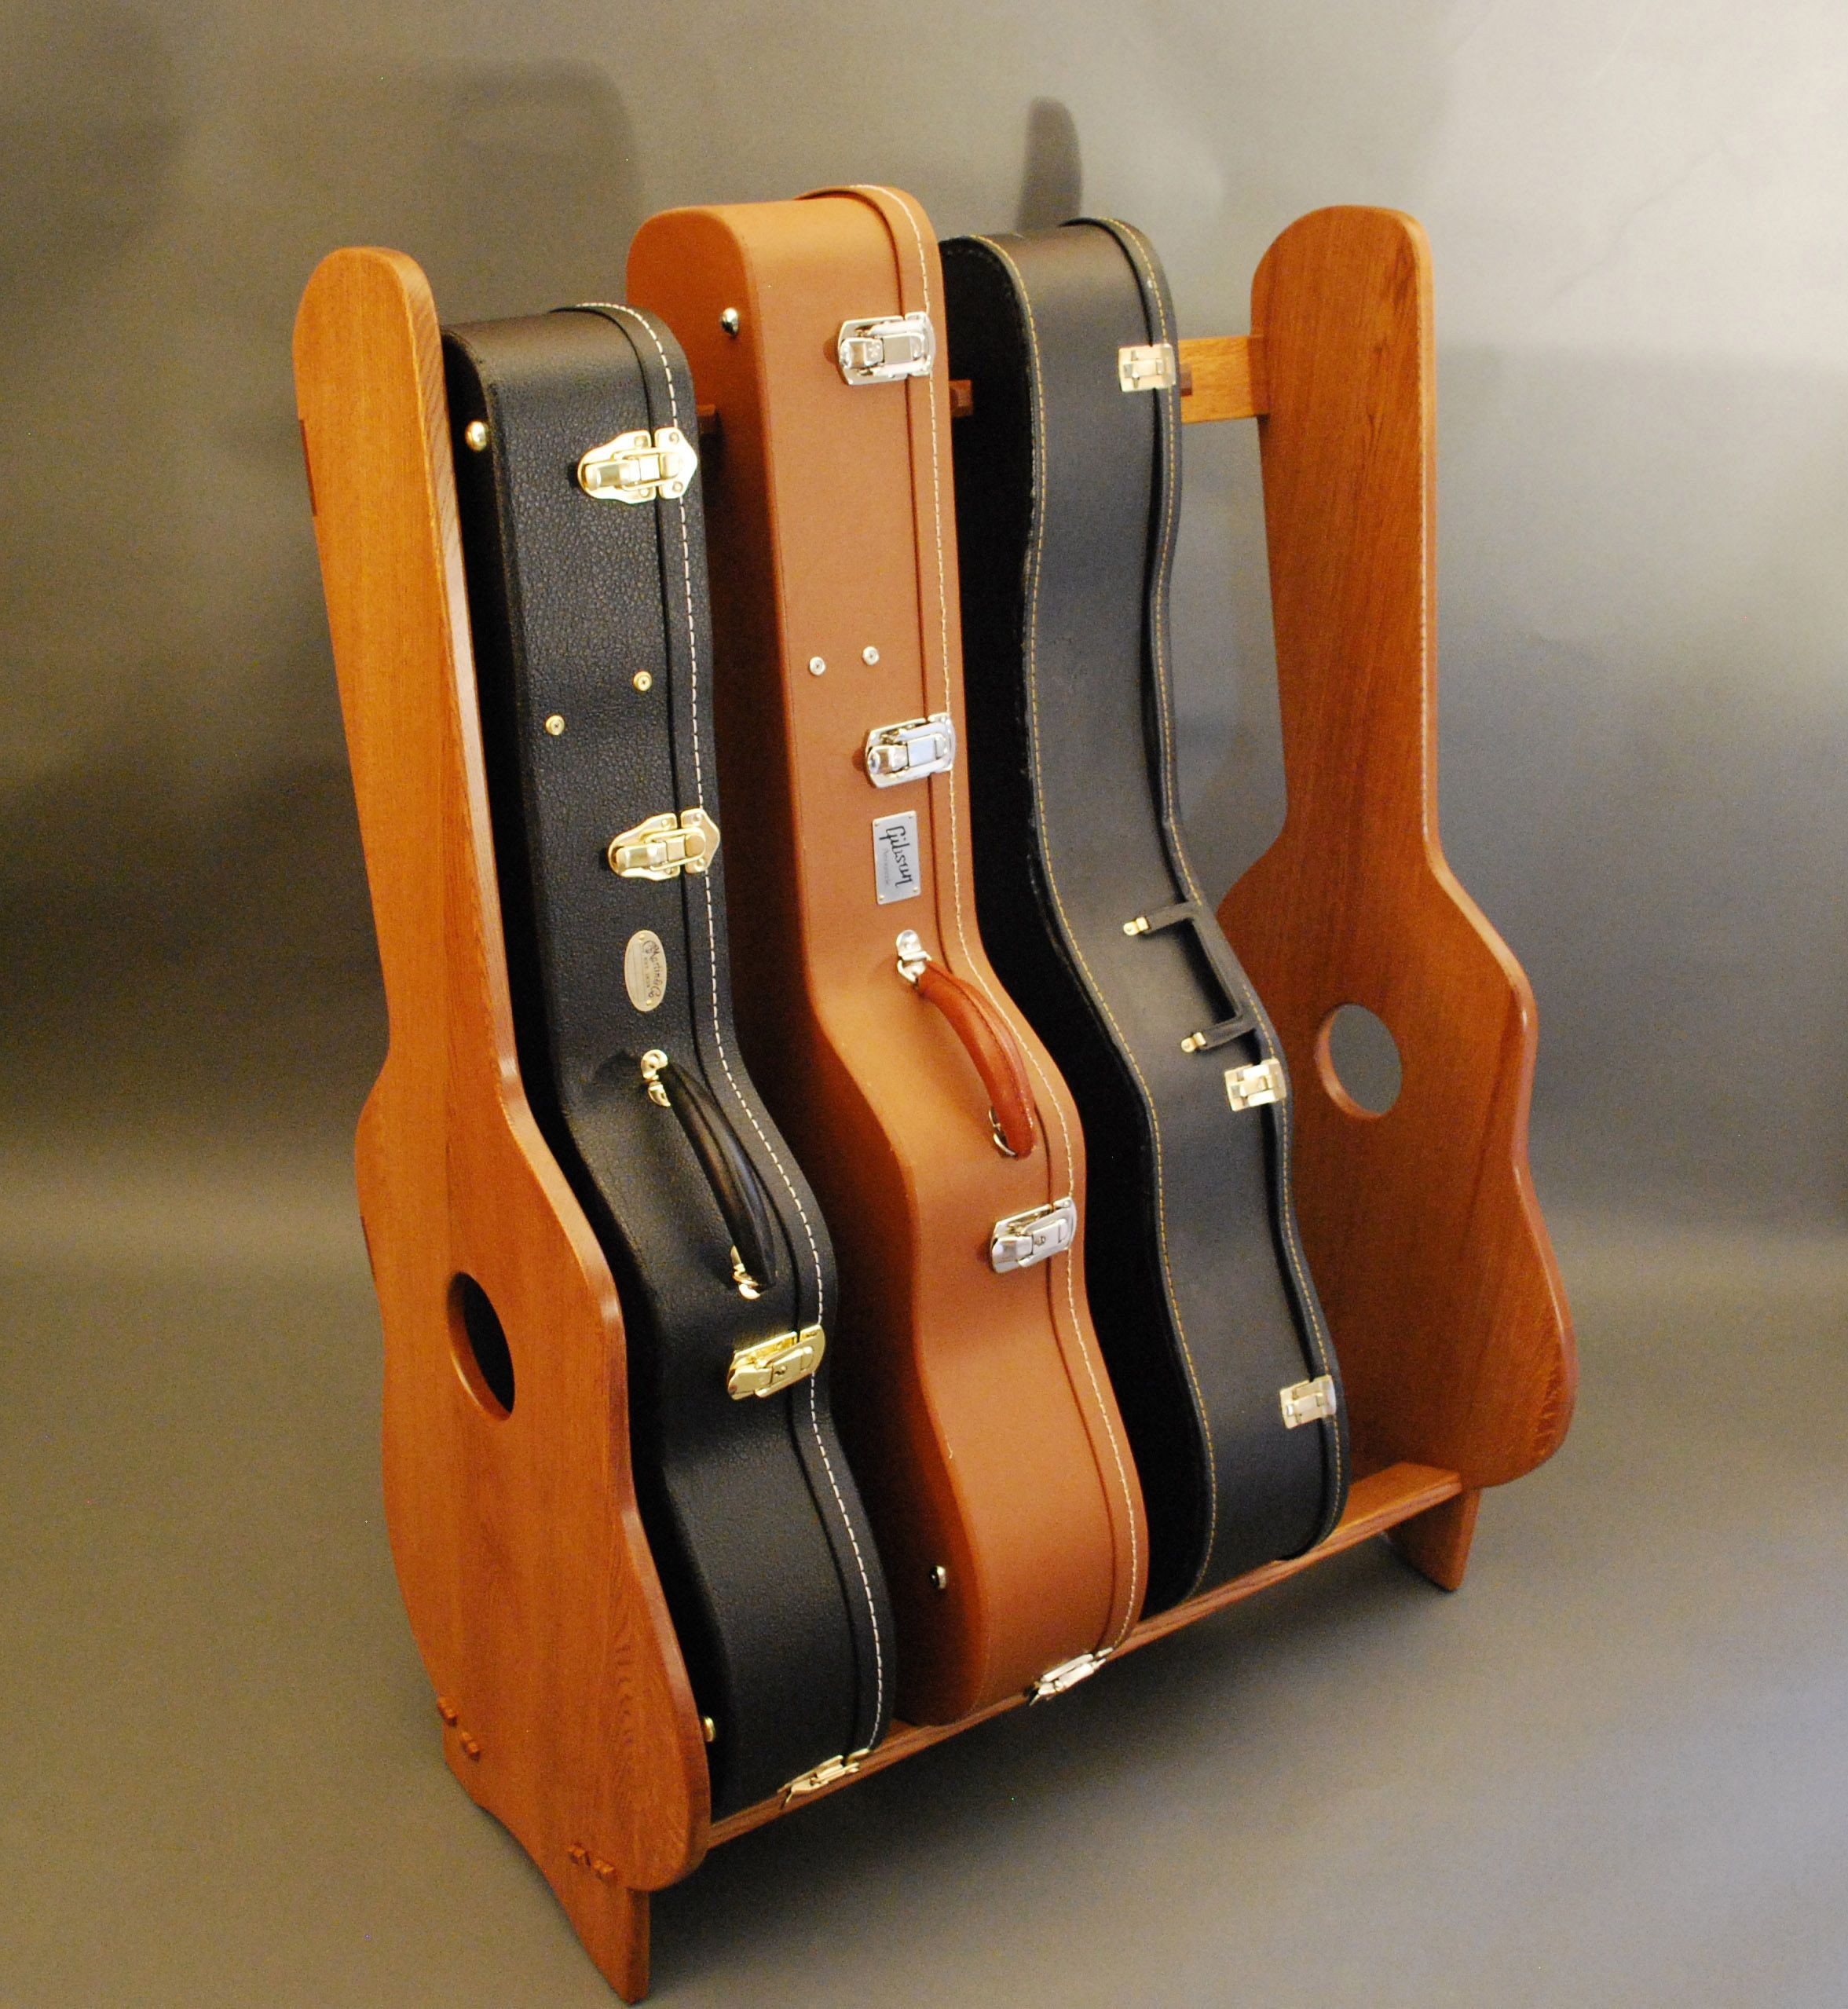 DIY Guitar Case Storage Rack
 Guitar rack